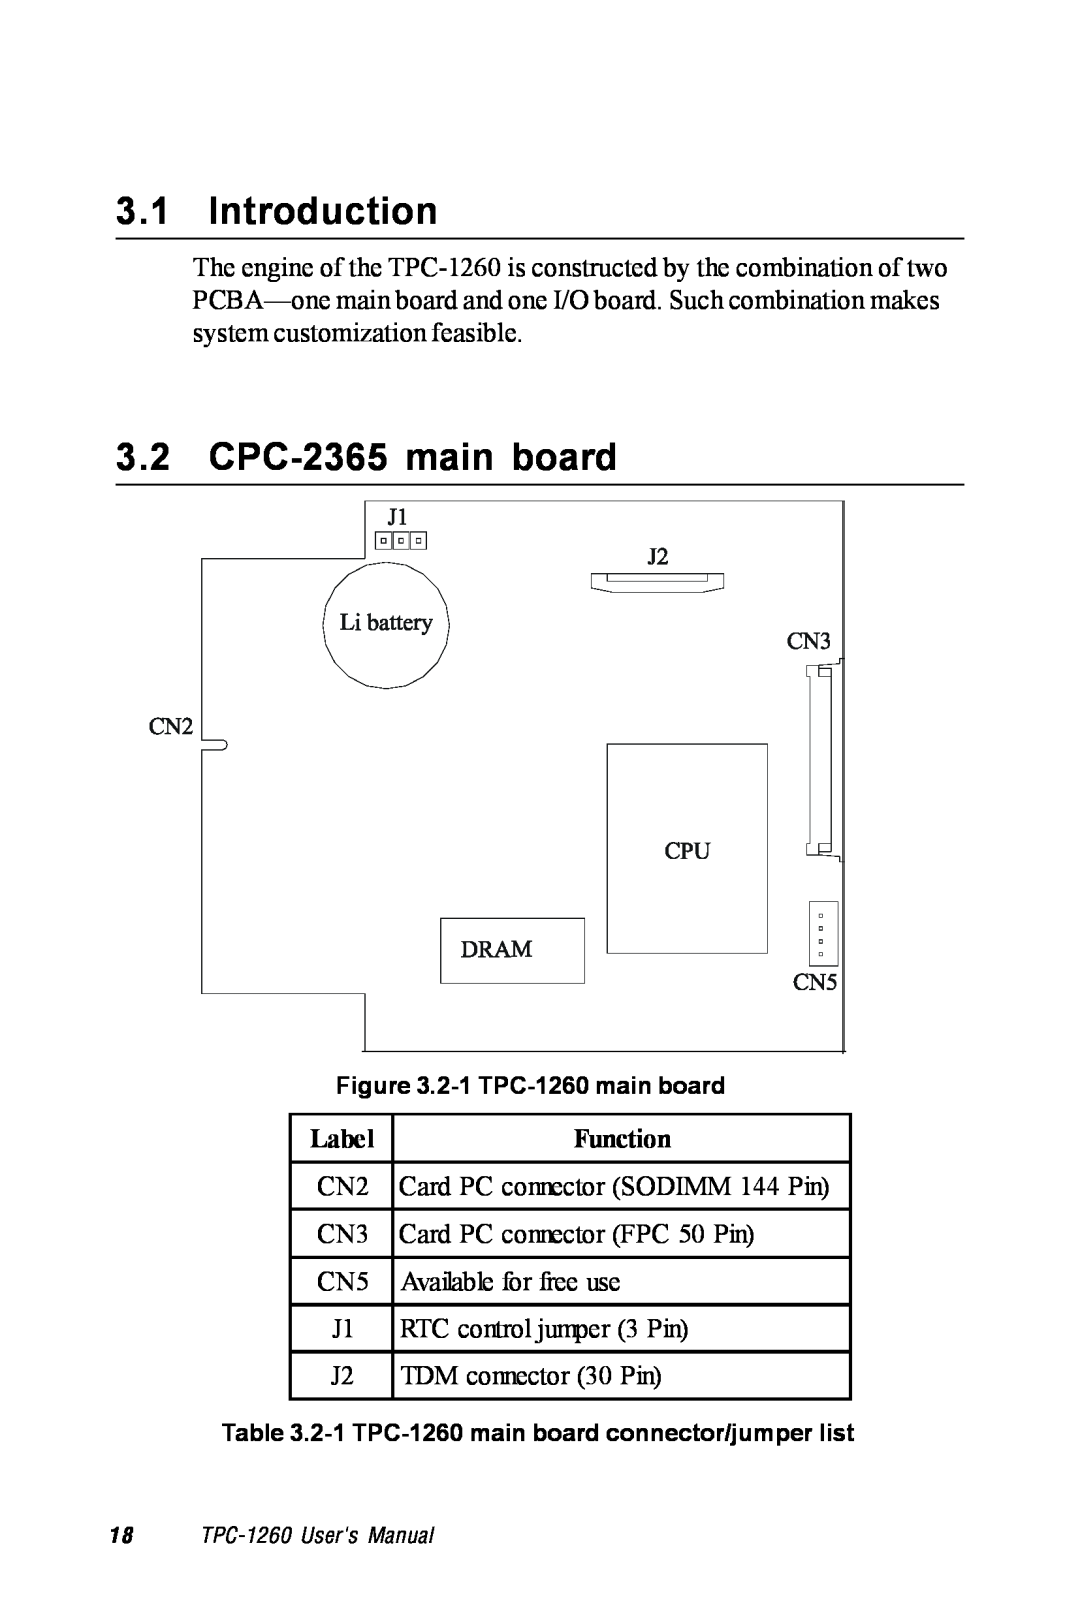 Advantech TPC-1260 manual Introduction, CPC-2365 main board, Label, Function 